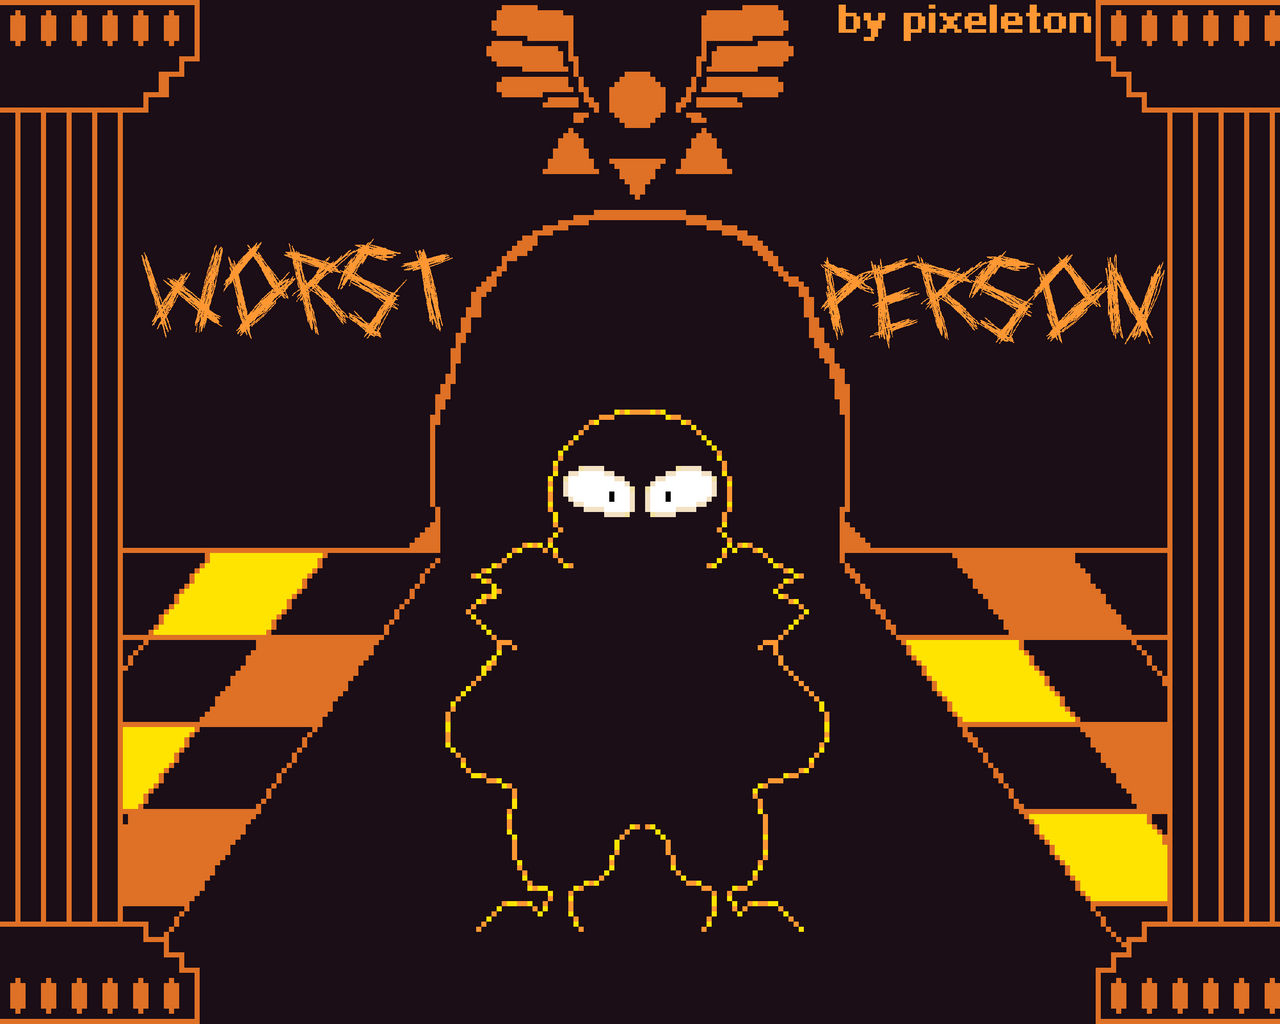 wiki sans - worst person by Pixeleton83 on DeviantArt